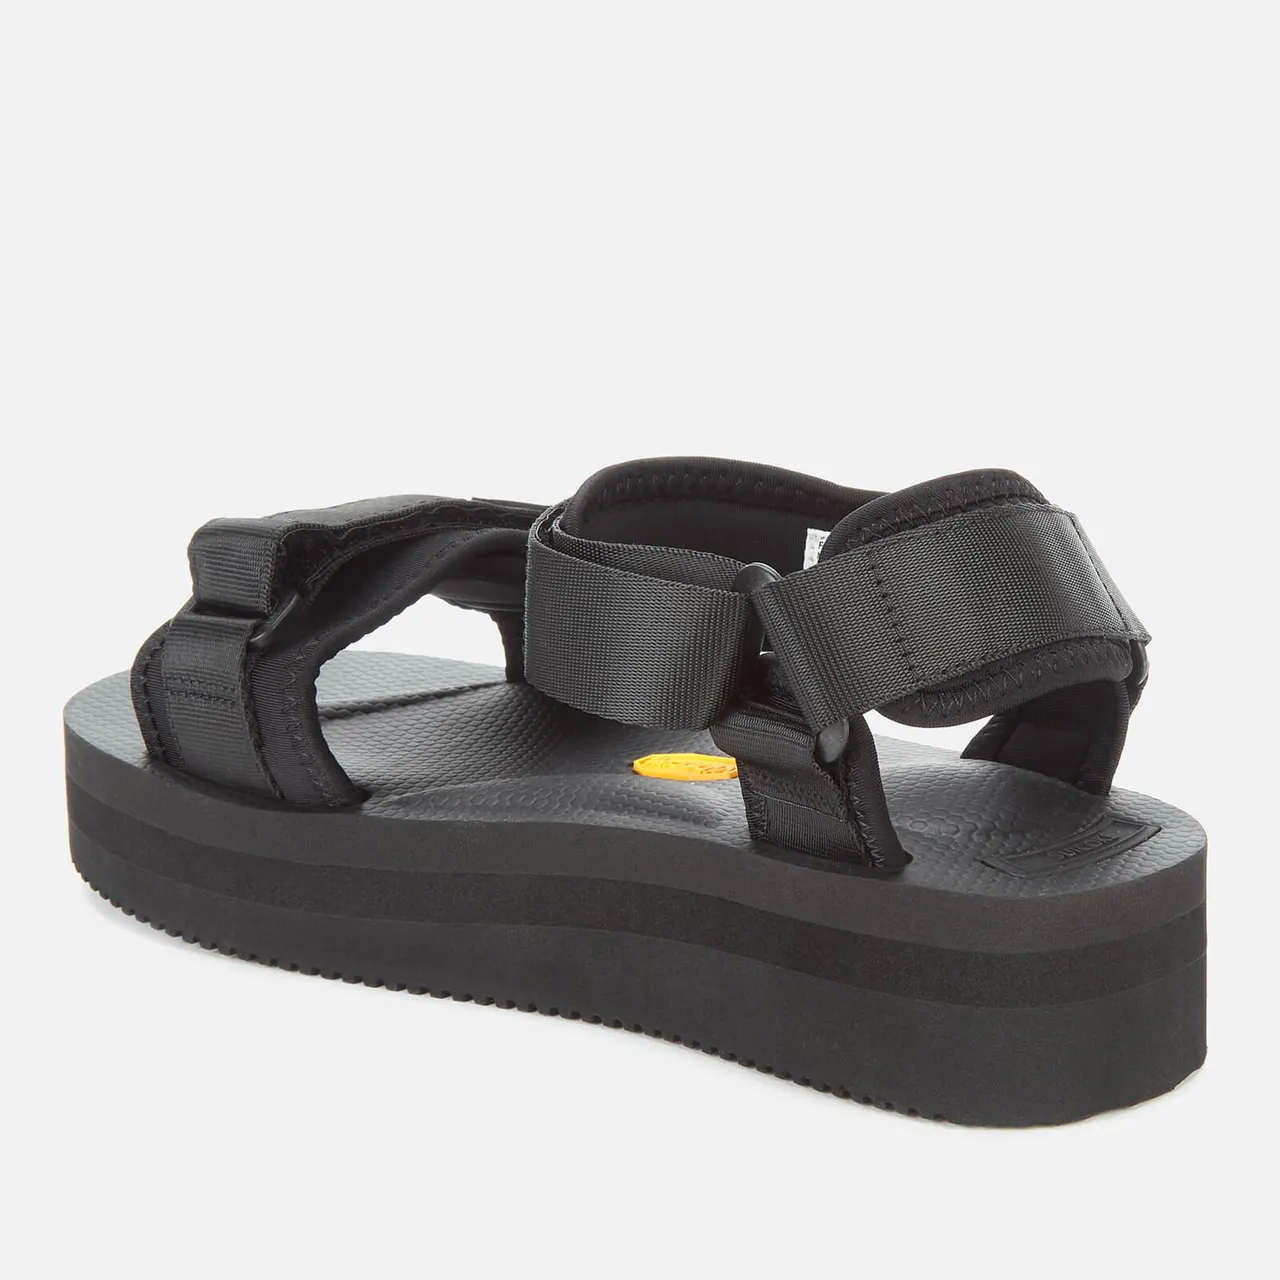 Suicoke Women's Cel-Vpo Flatform Sandals - Black